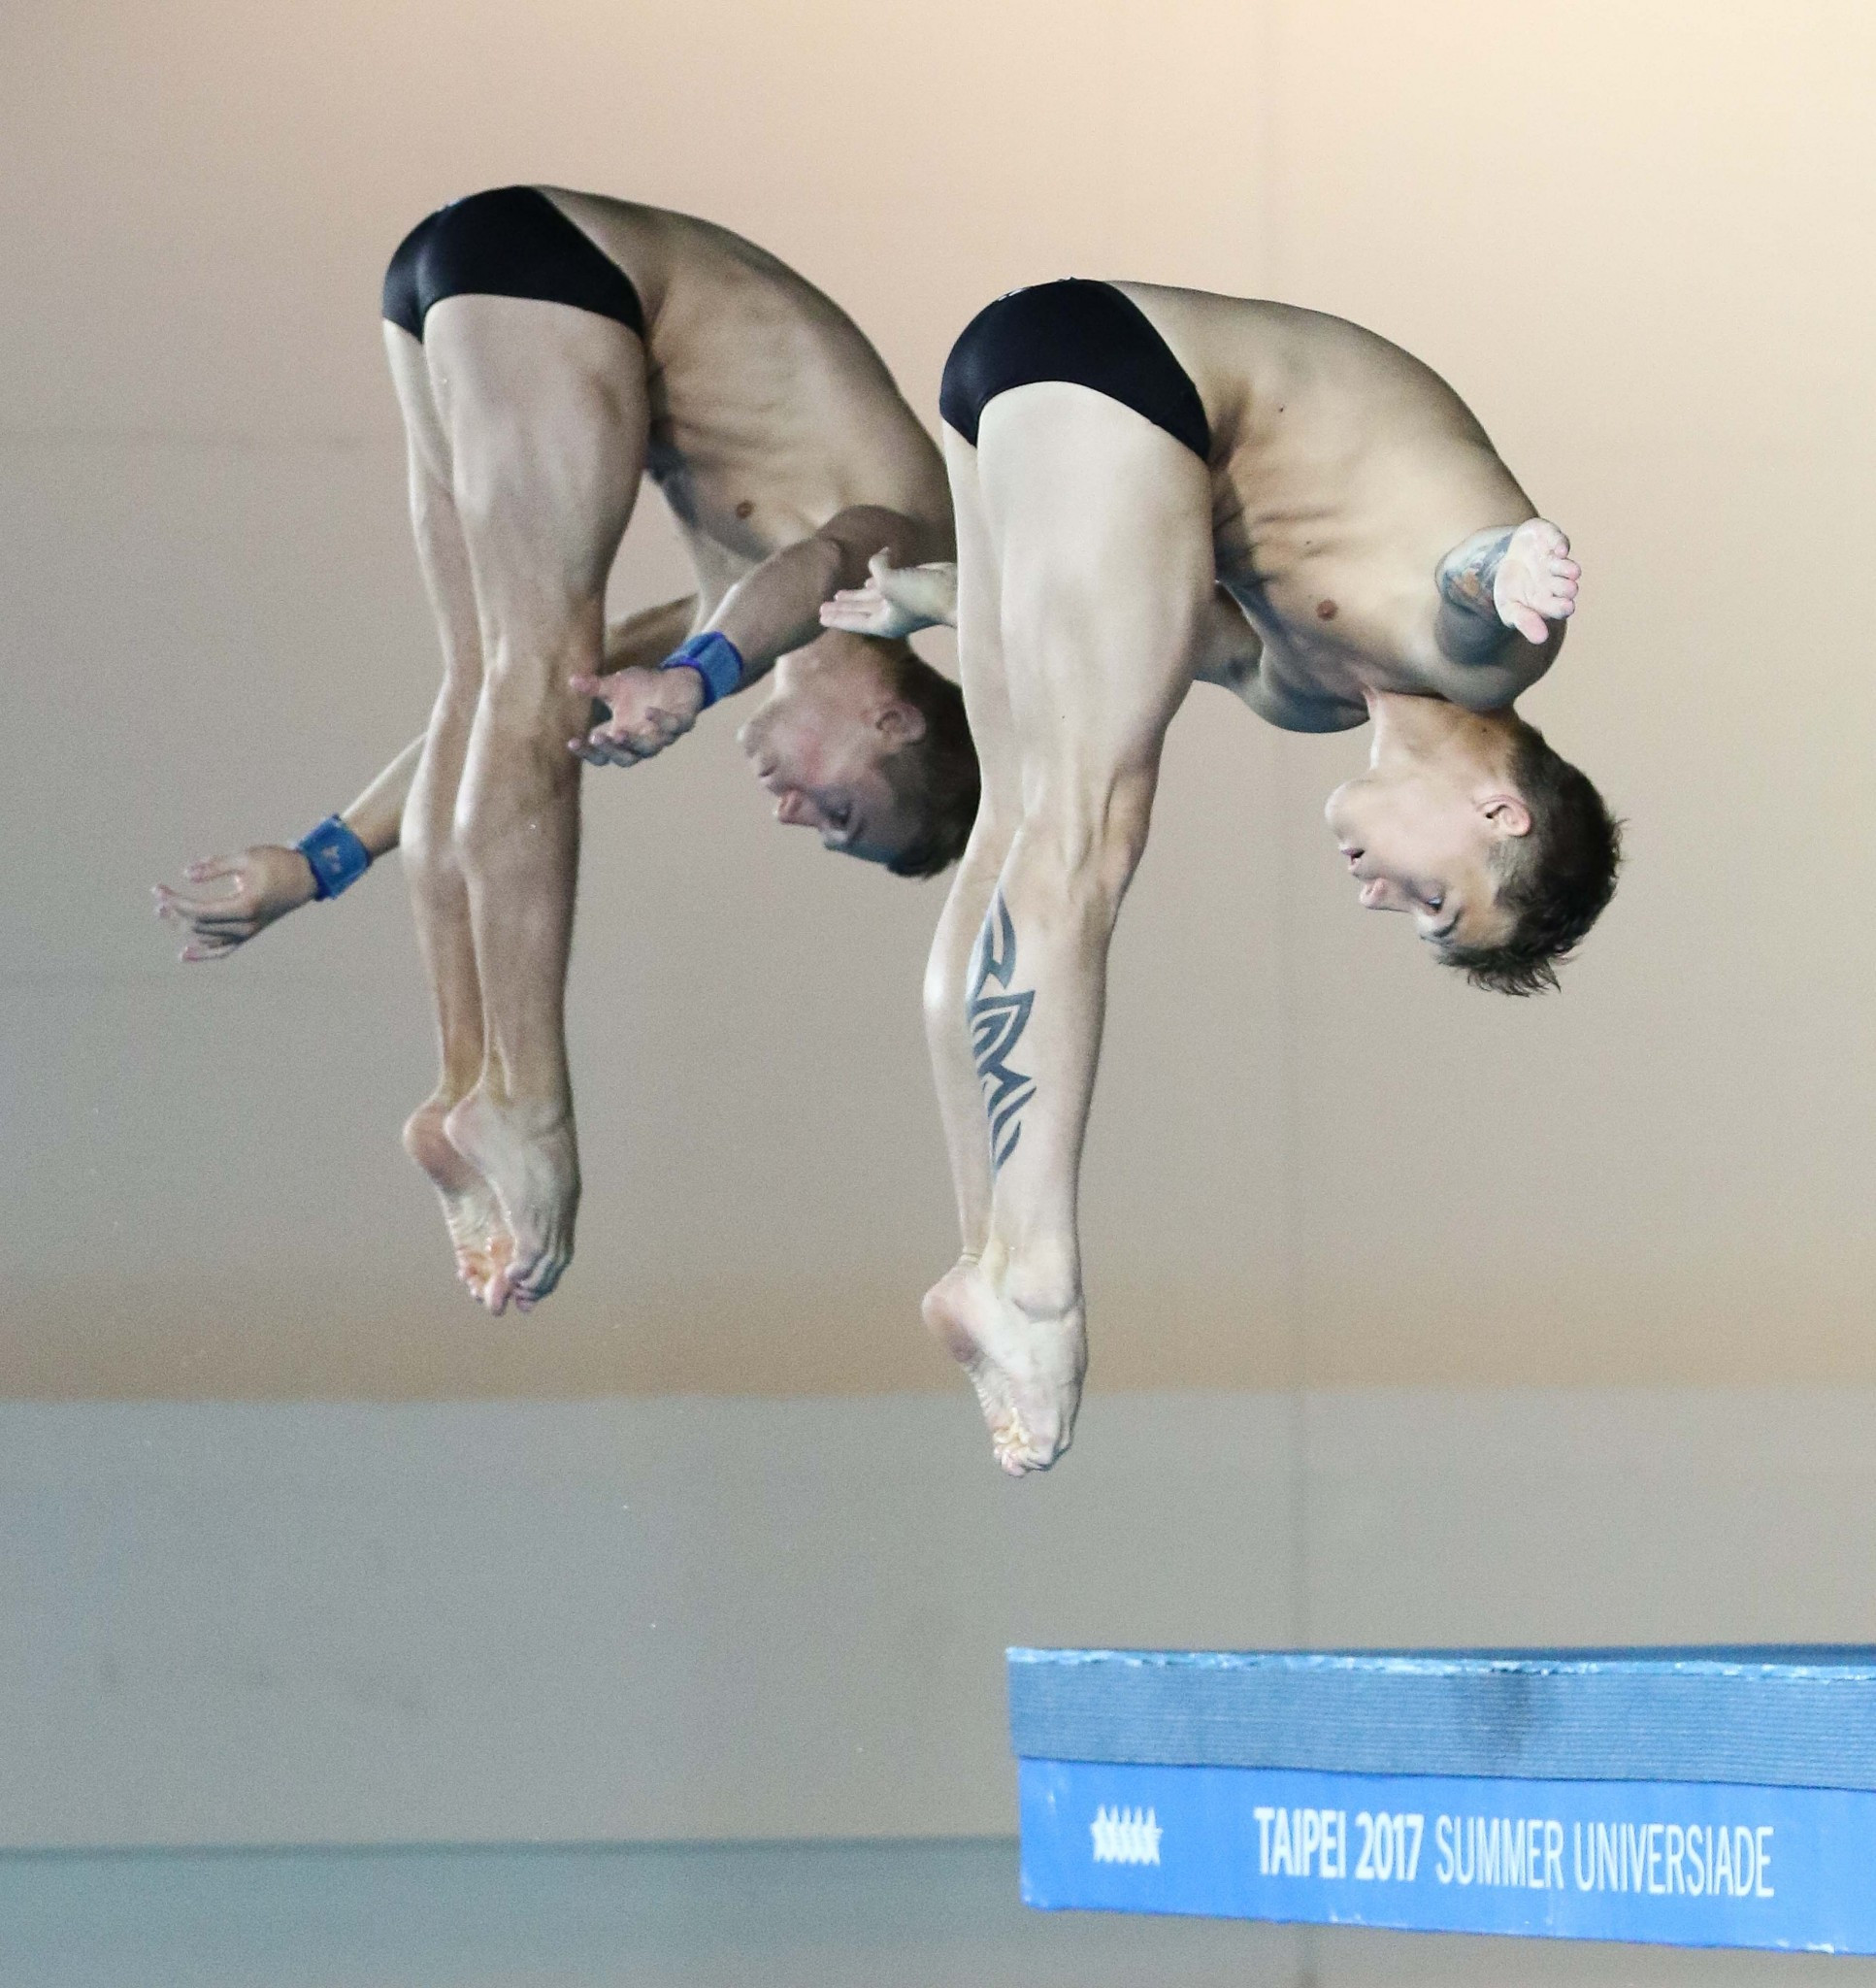 Russia's Roman Izmailov and Nikita Shleikher won the men's 10m synchronised diving gold medal ©Taipei 2017